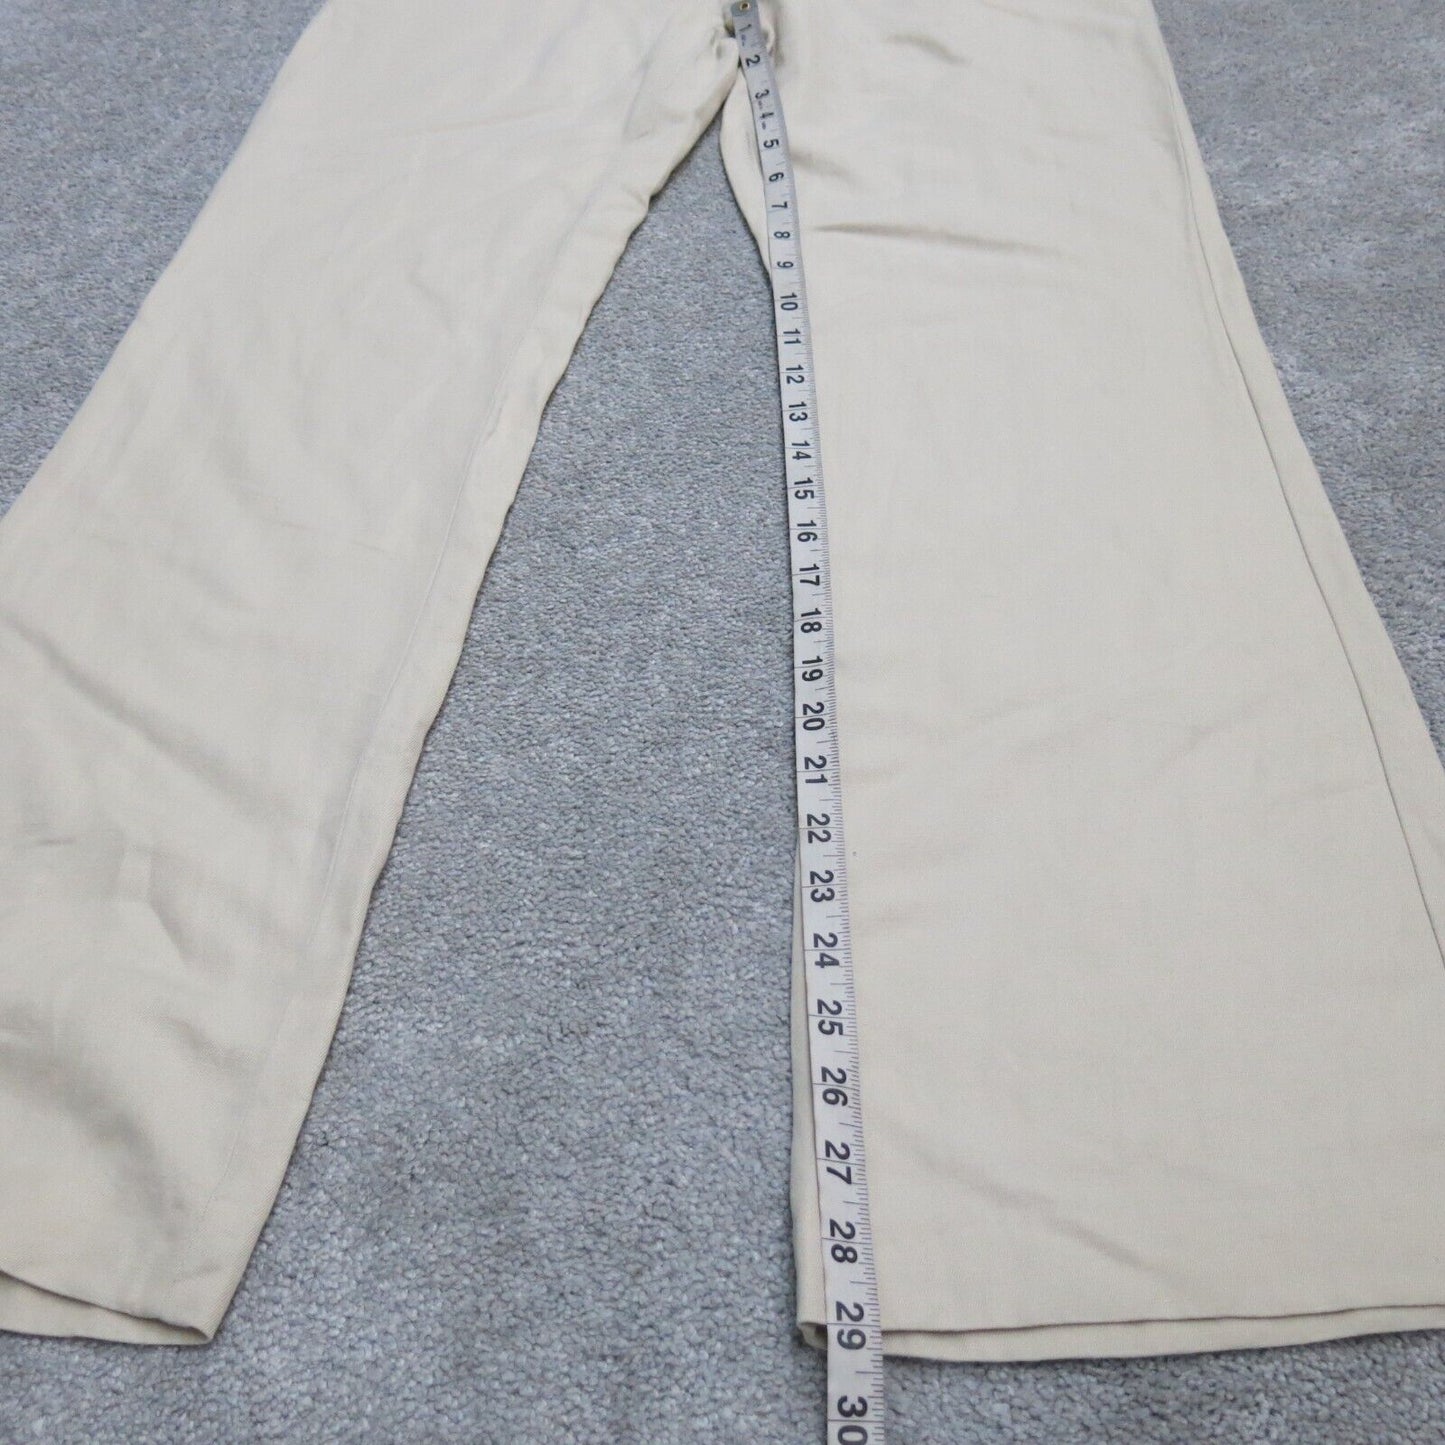 H&M Mens Dress Pant Wide Leg Low Rise Stretch Pockets Cream/Ivory Size US 8